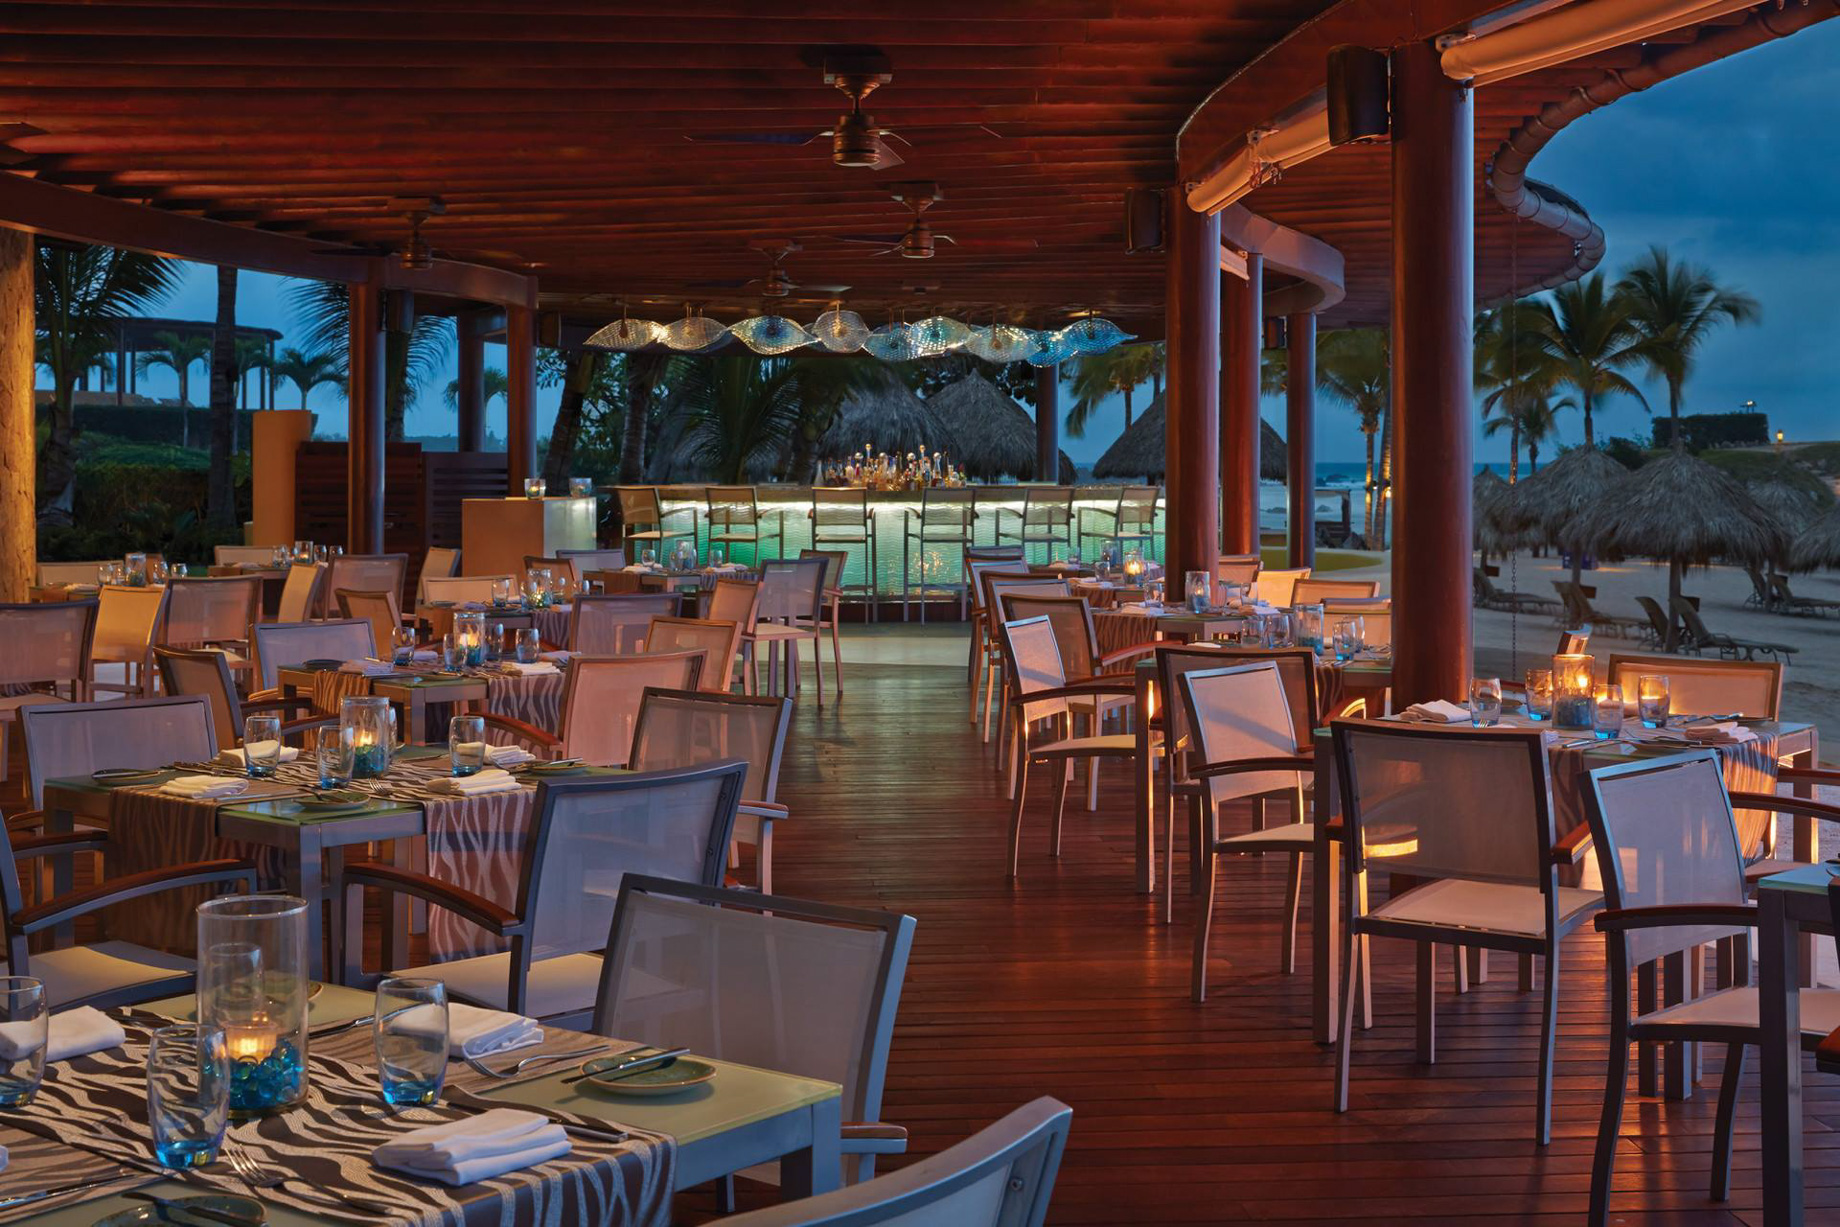 Four Seasons Resort Punta Mita – Nayarit, Mexico – Beachfront Restaurant Sunset Dining